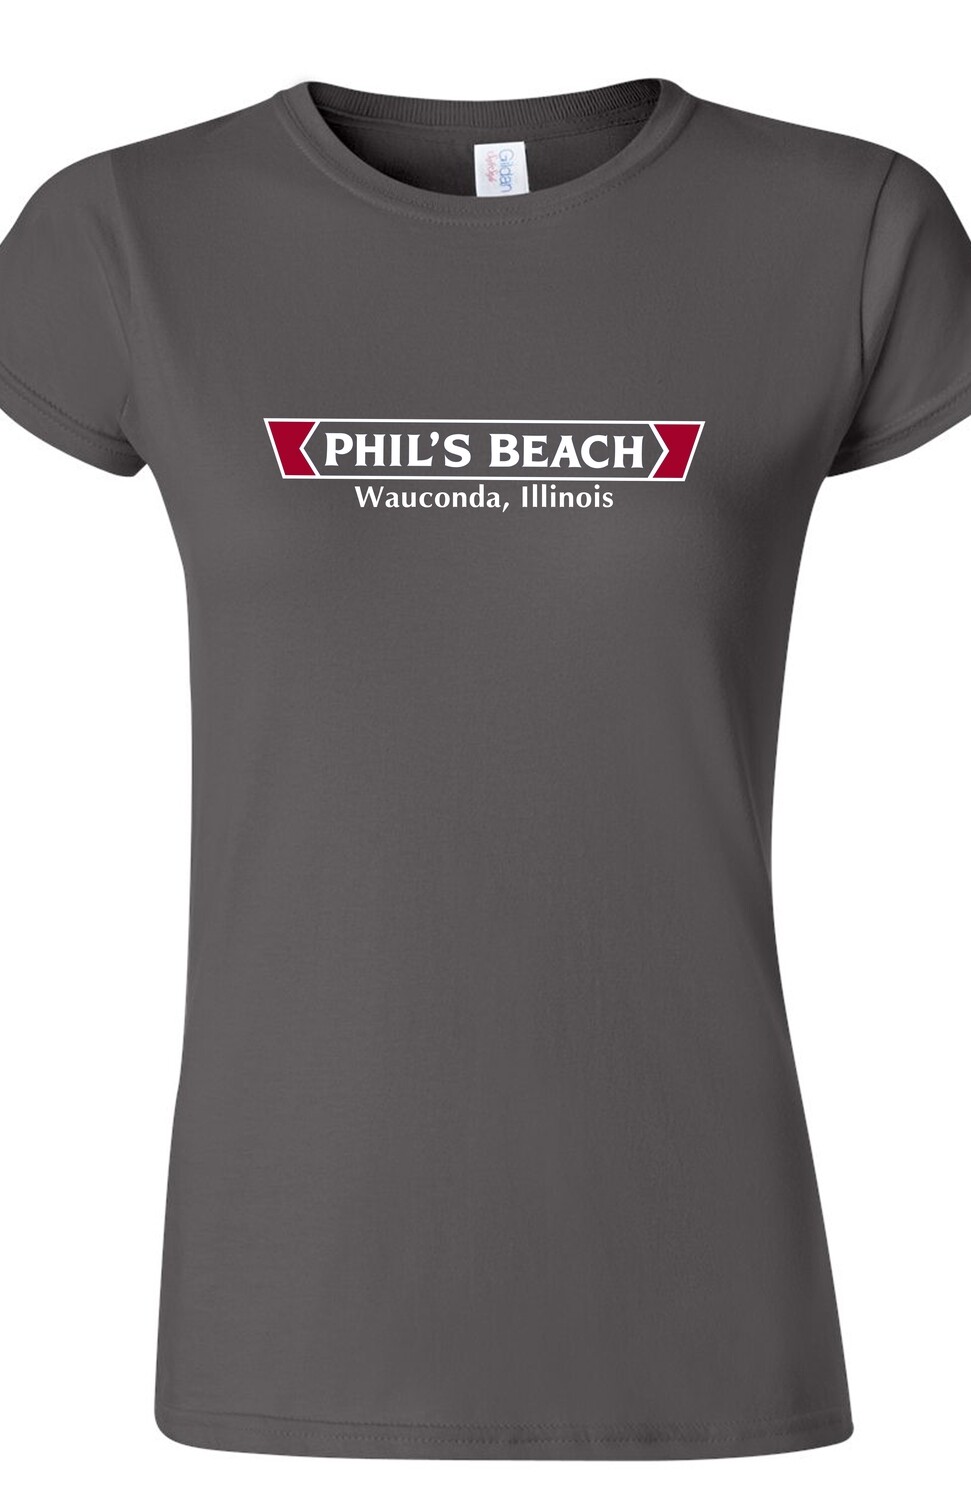 Phil's Beach Women's T-shirt